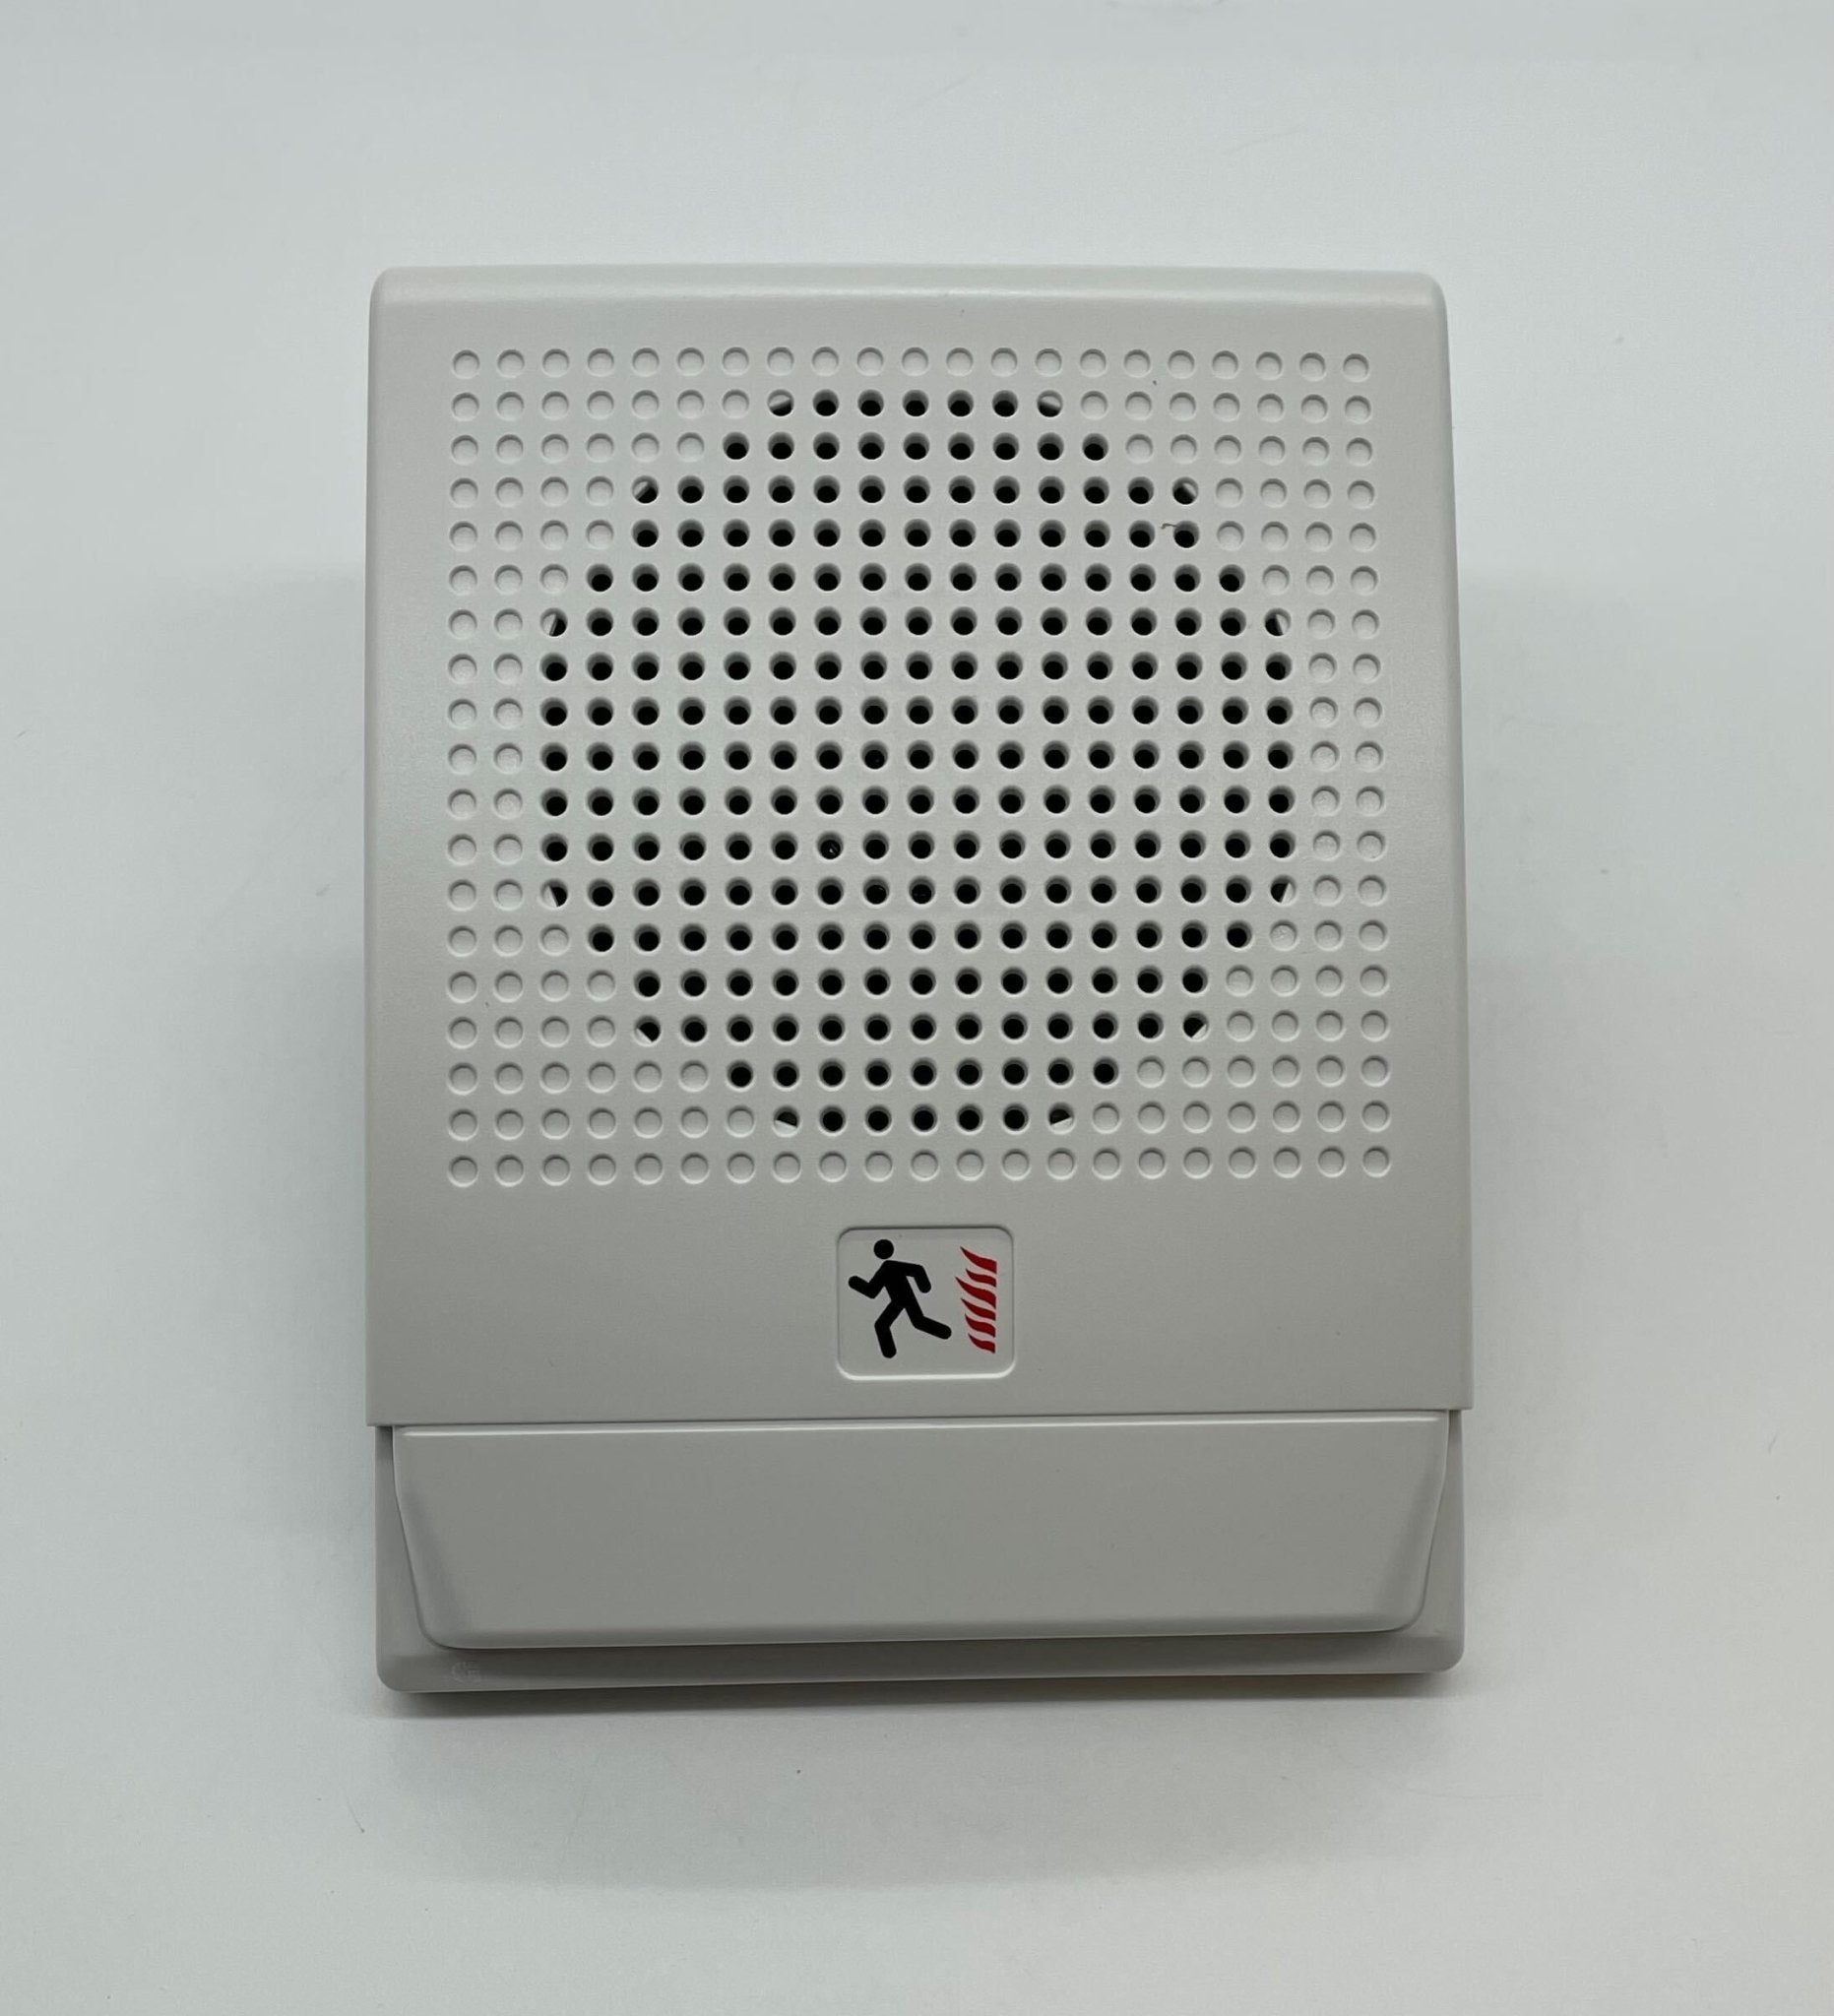 Edwards G4HFWN-S7 - The Fire Alarm Supplier